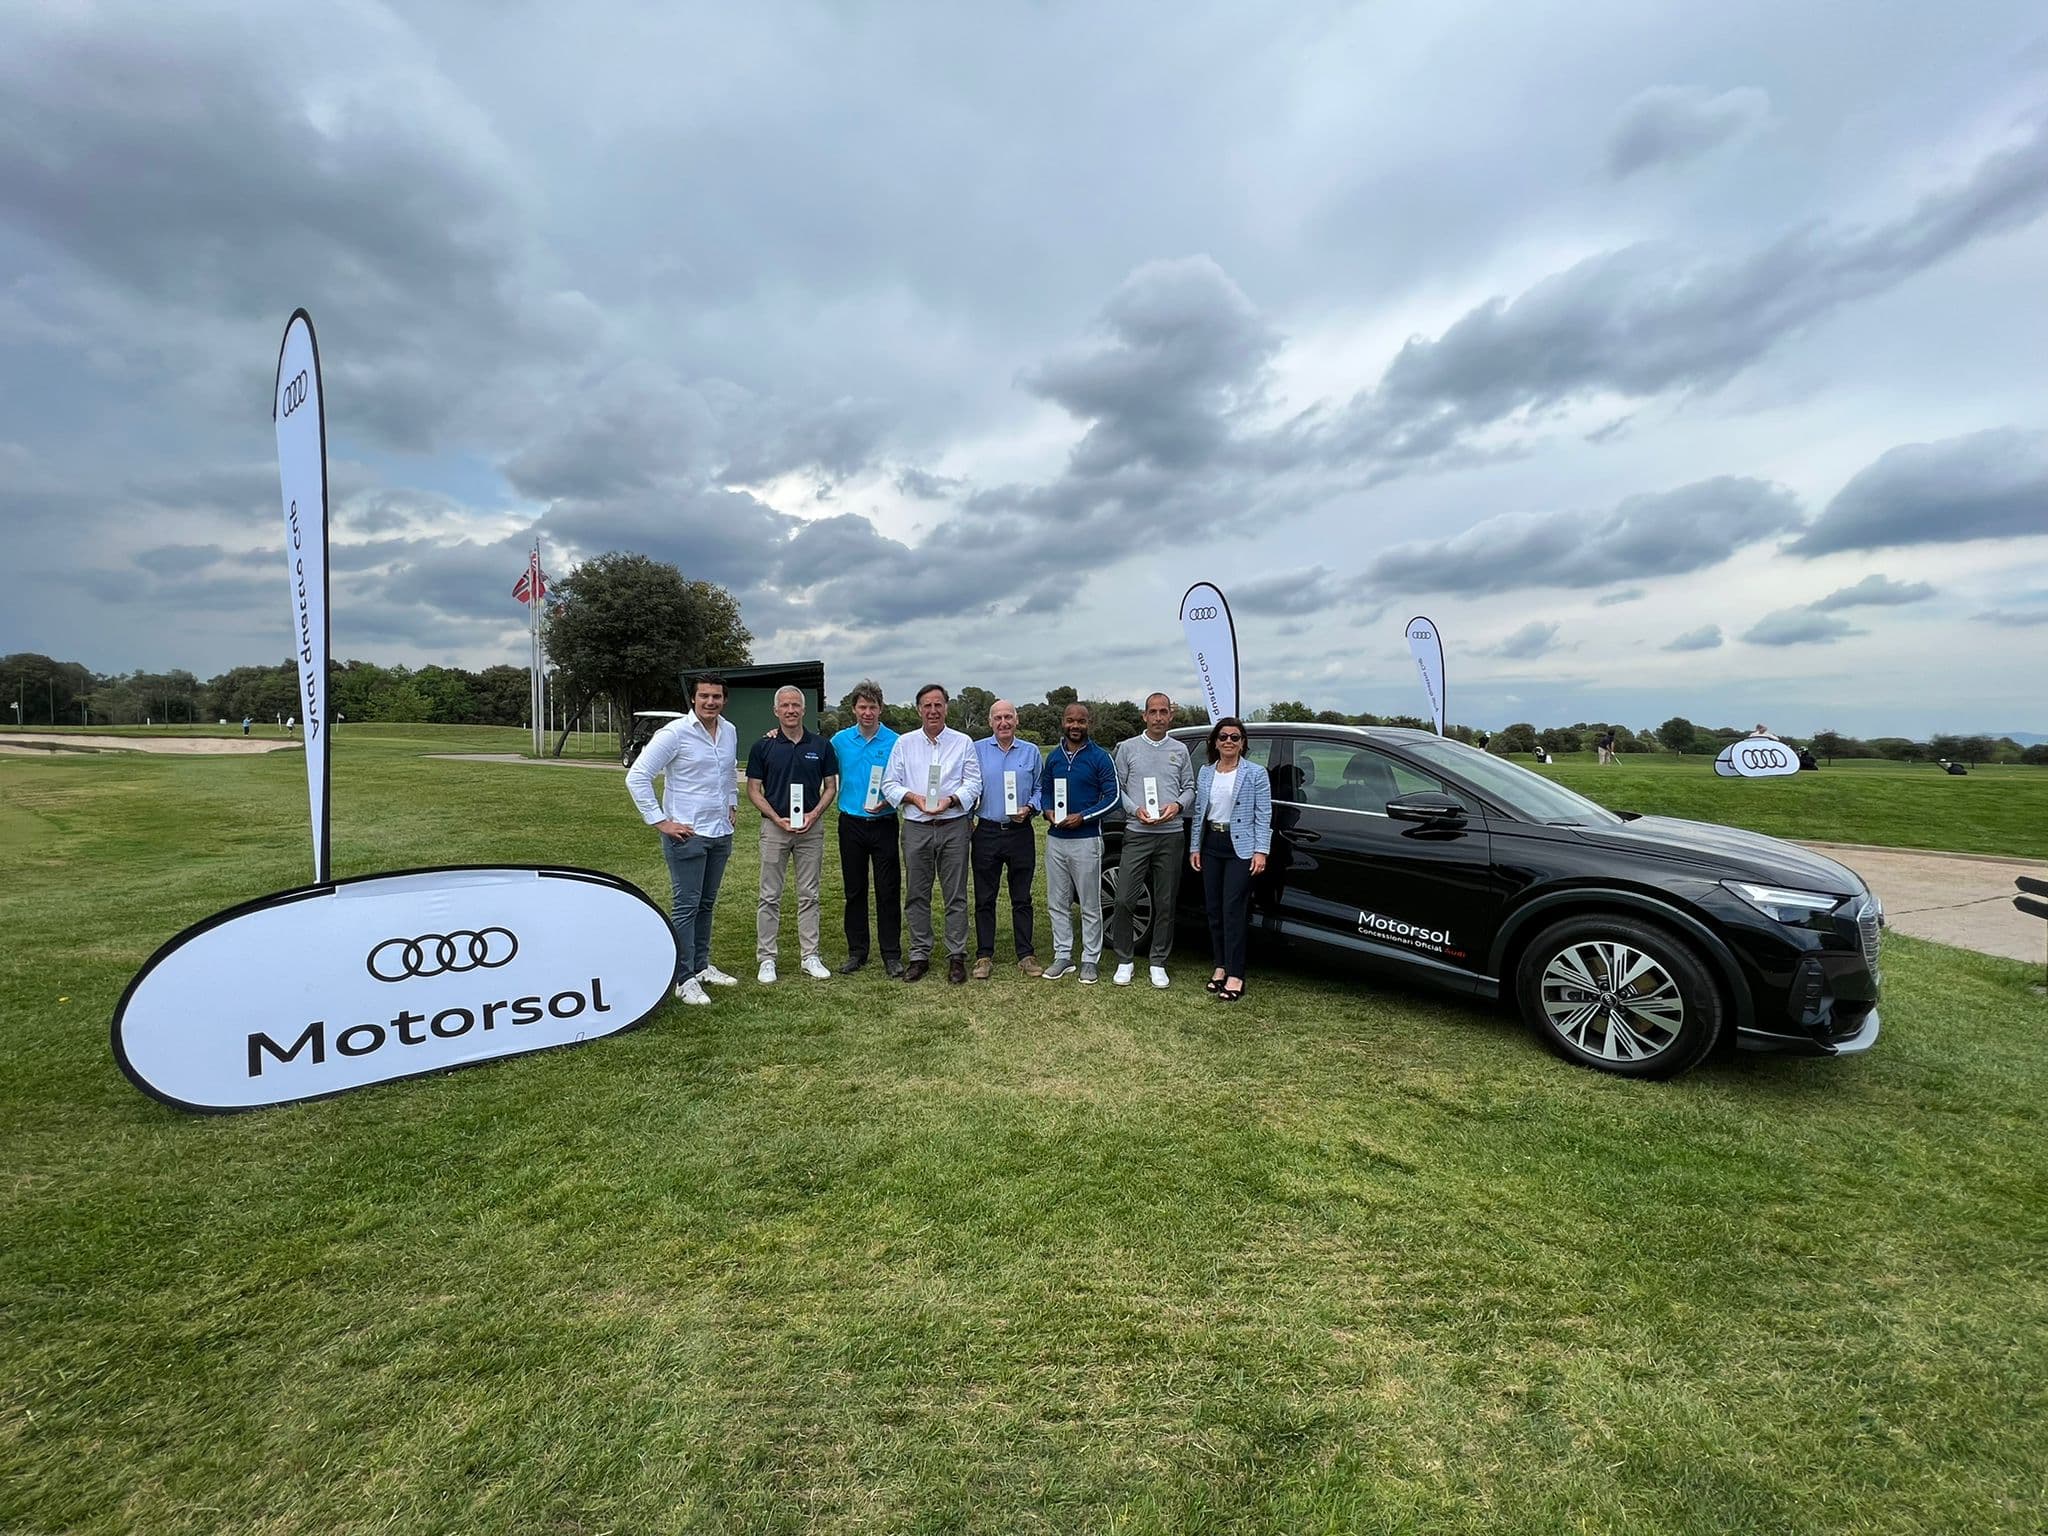 Ganadores del Audi quattro Cup 2022 en el Real Club de Golf El Prat